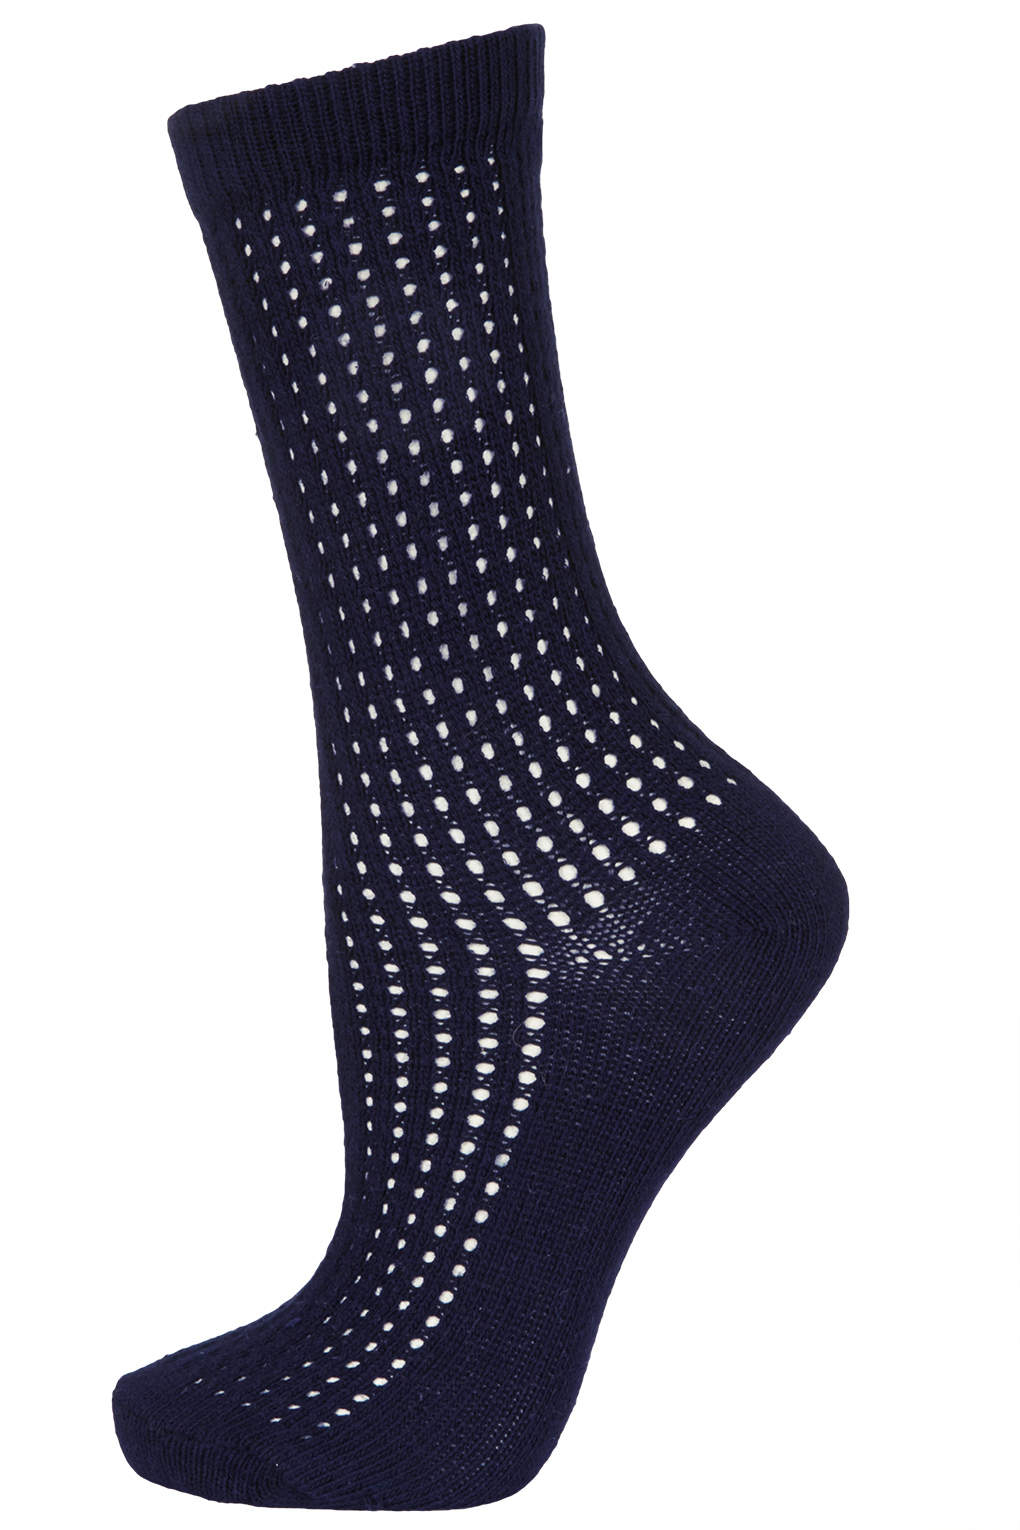 Topshop | Airtex Ankle Socks - Navy Blue | Lyst